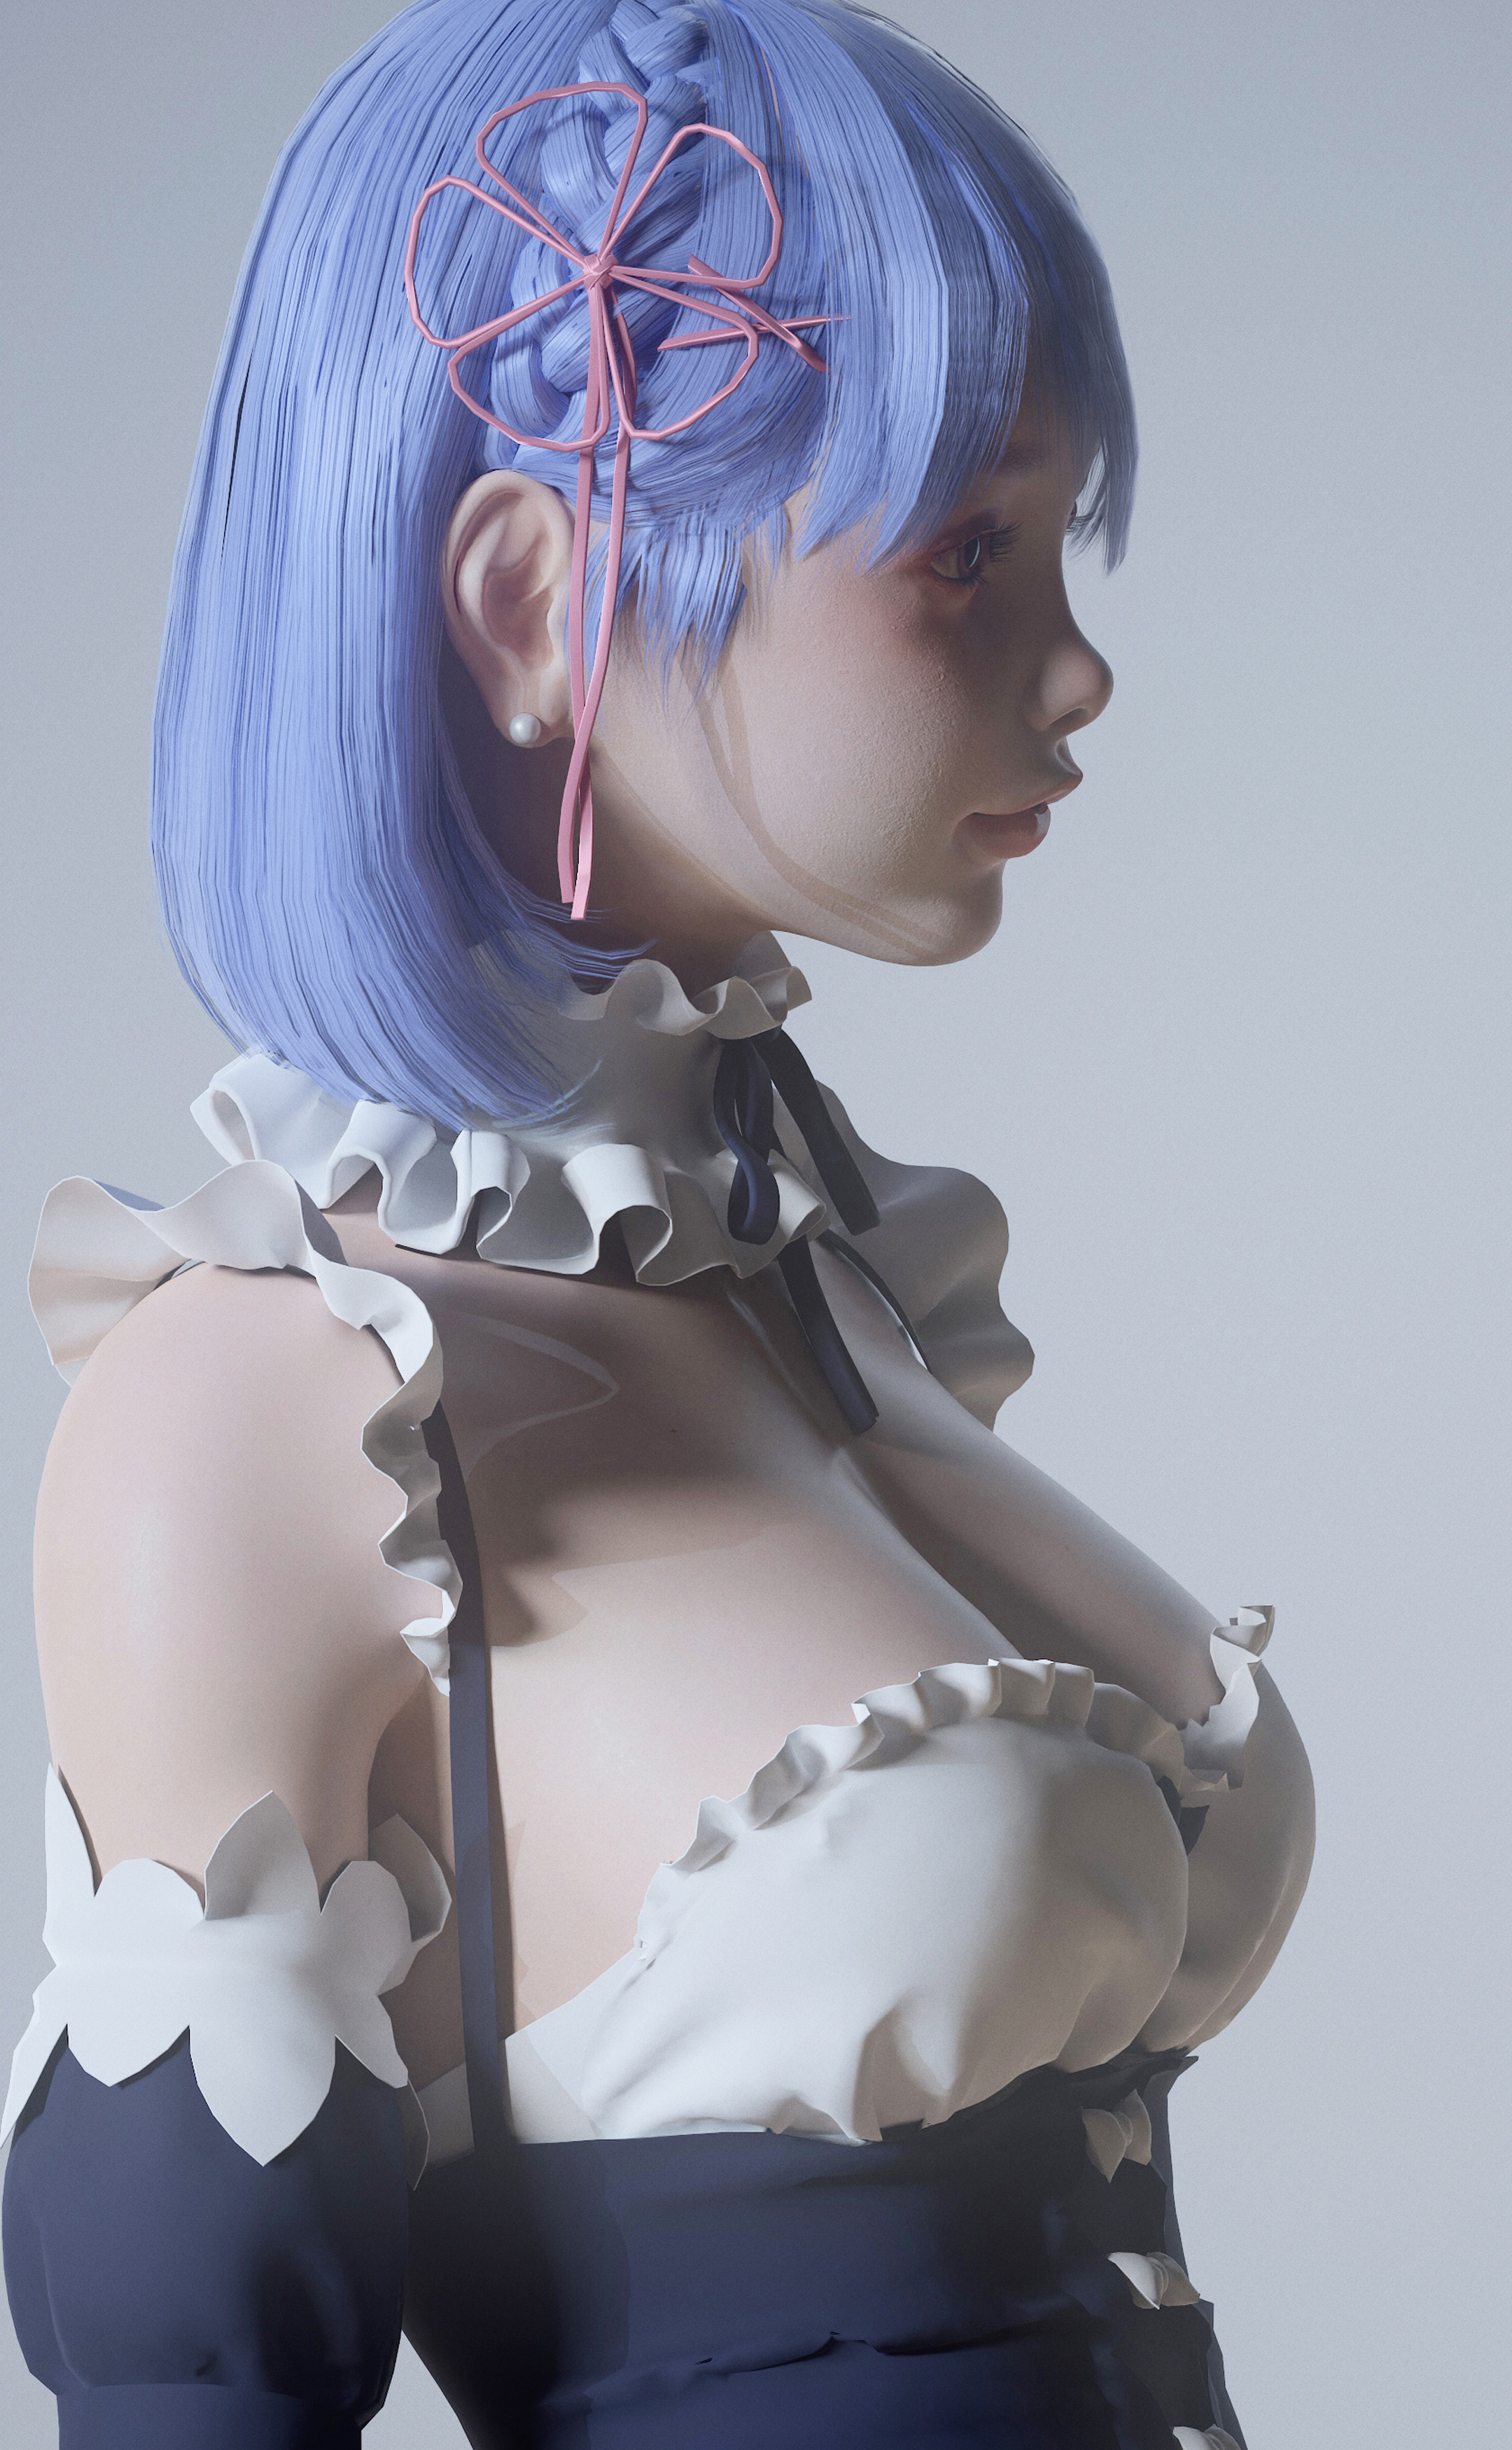 General 2160x3500 CGI saw2008 blue hair maid outfit maid Re:Zero Kara Hajimeru Isekai Seikatsu Rem (Re:Zero) big boobs